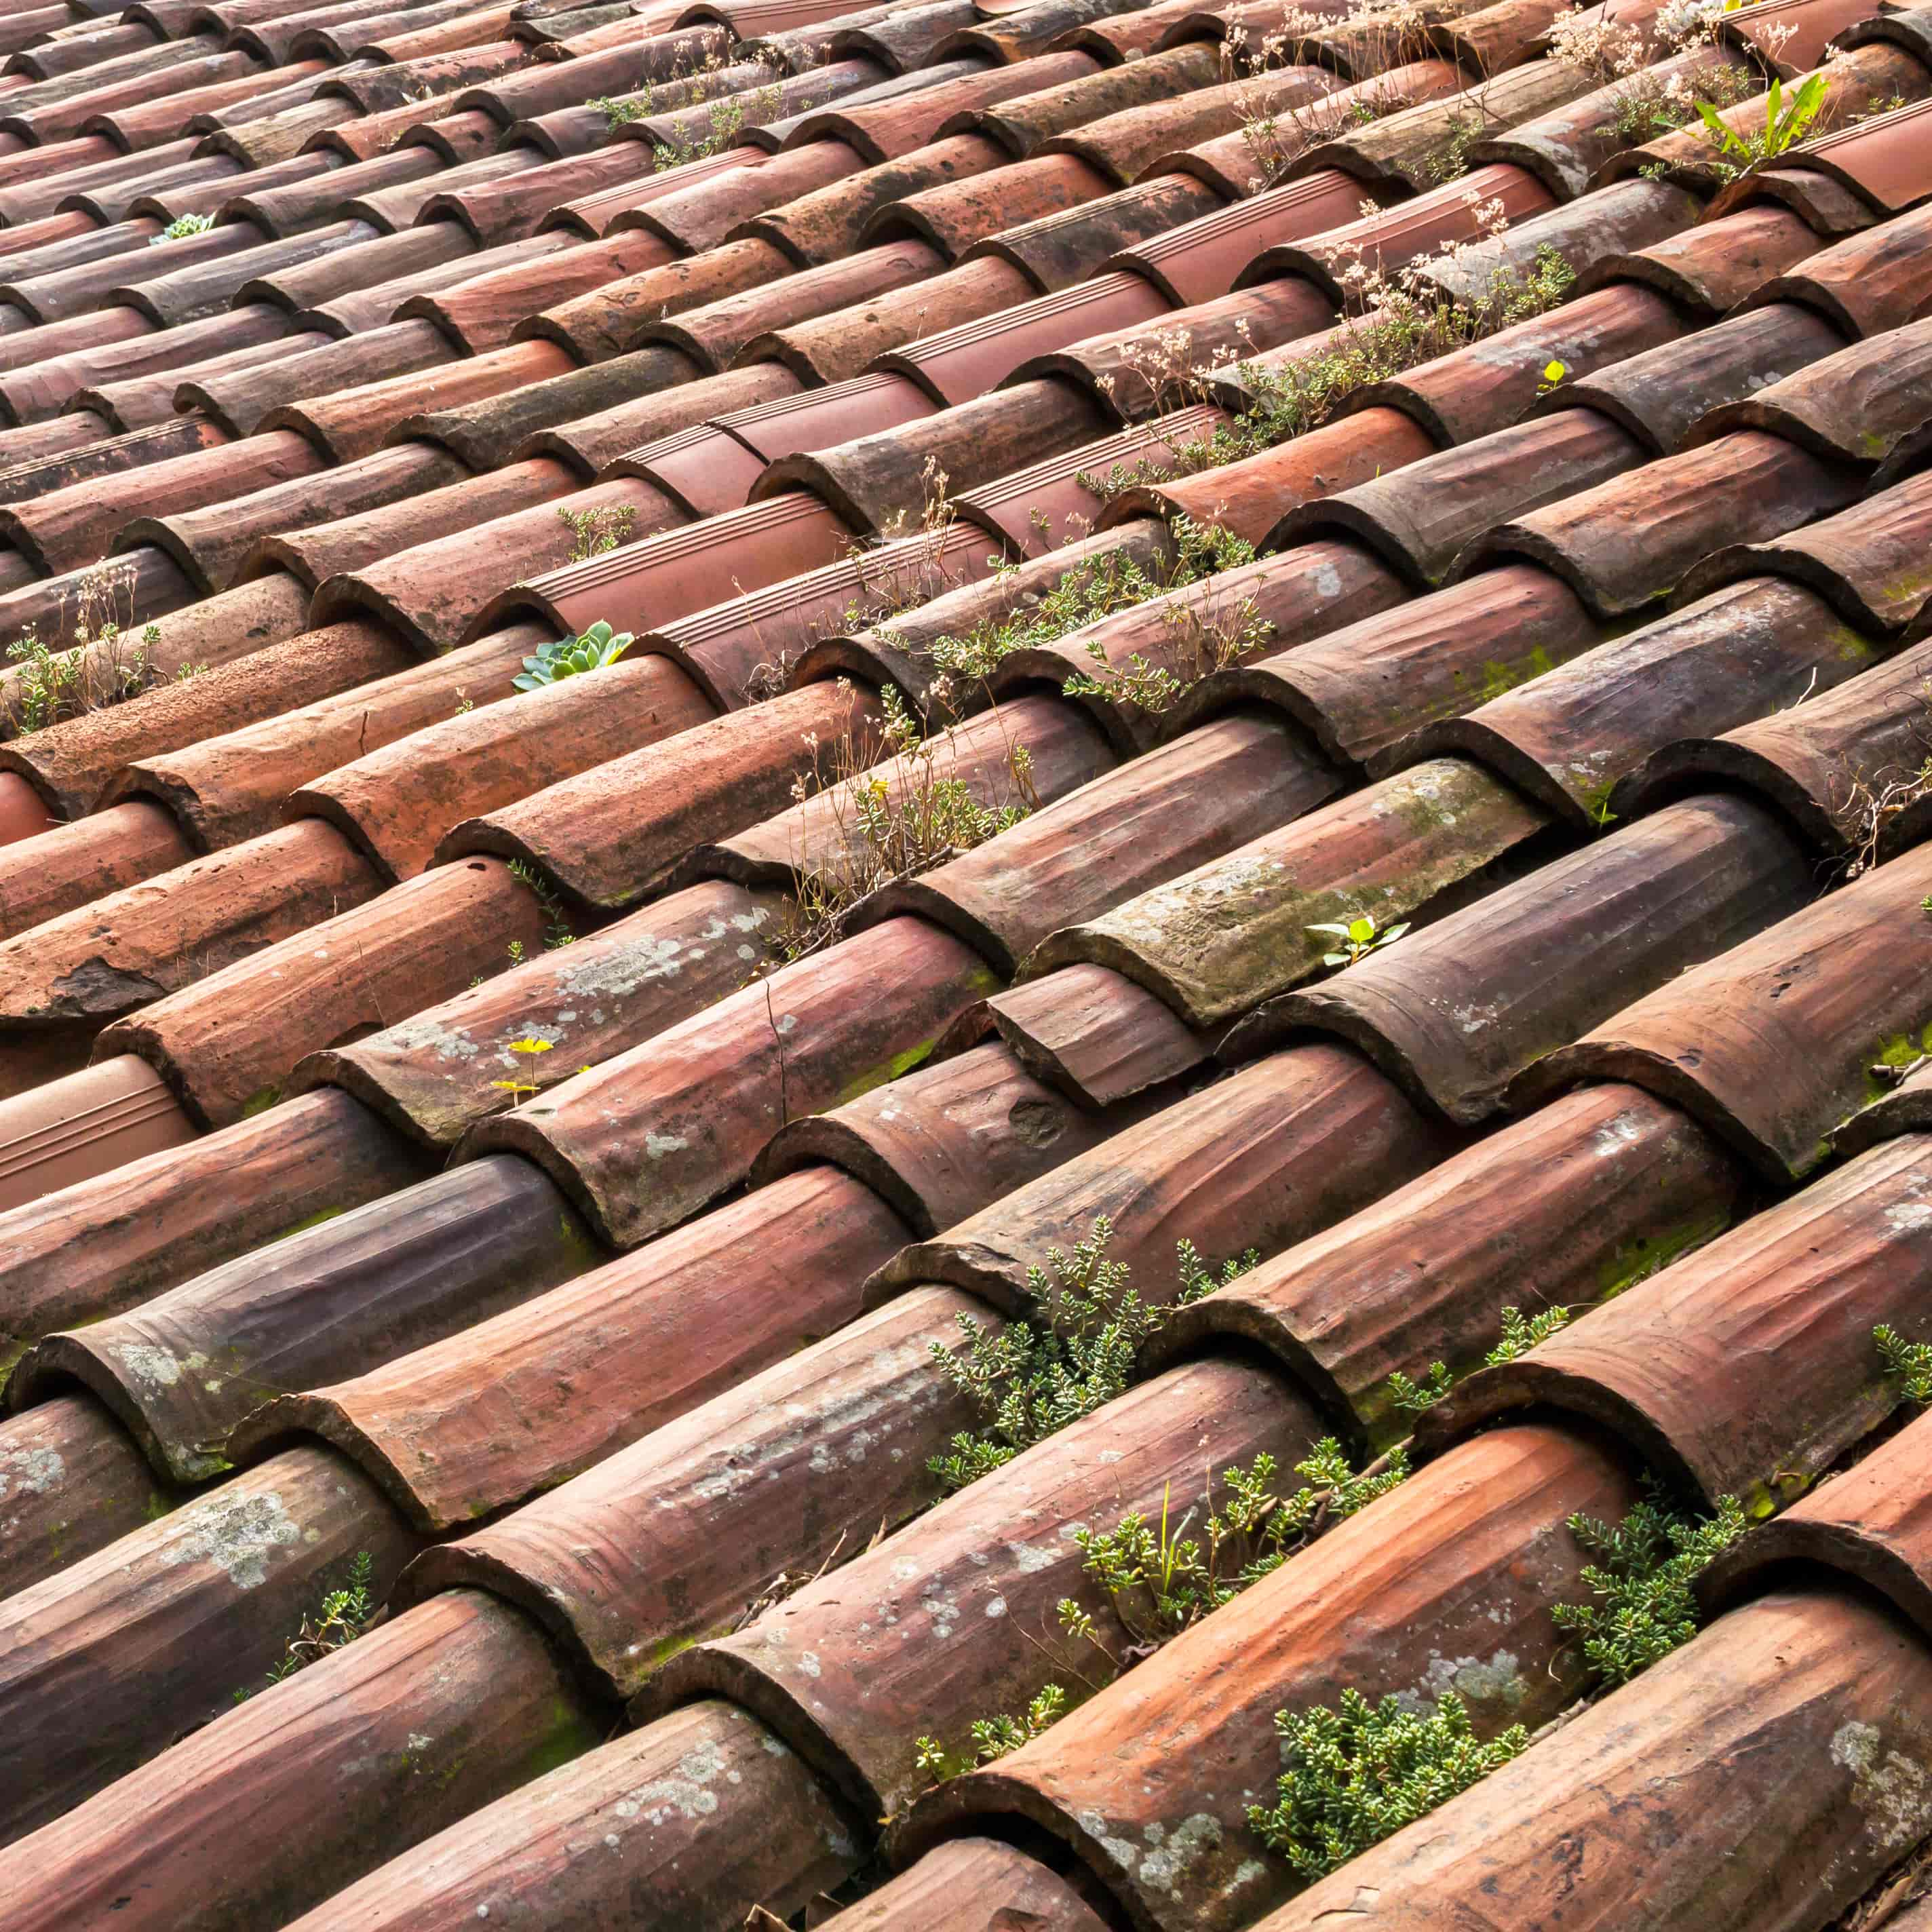 old tile roof